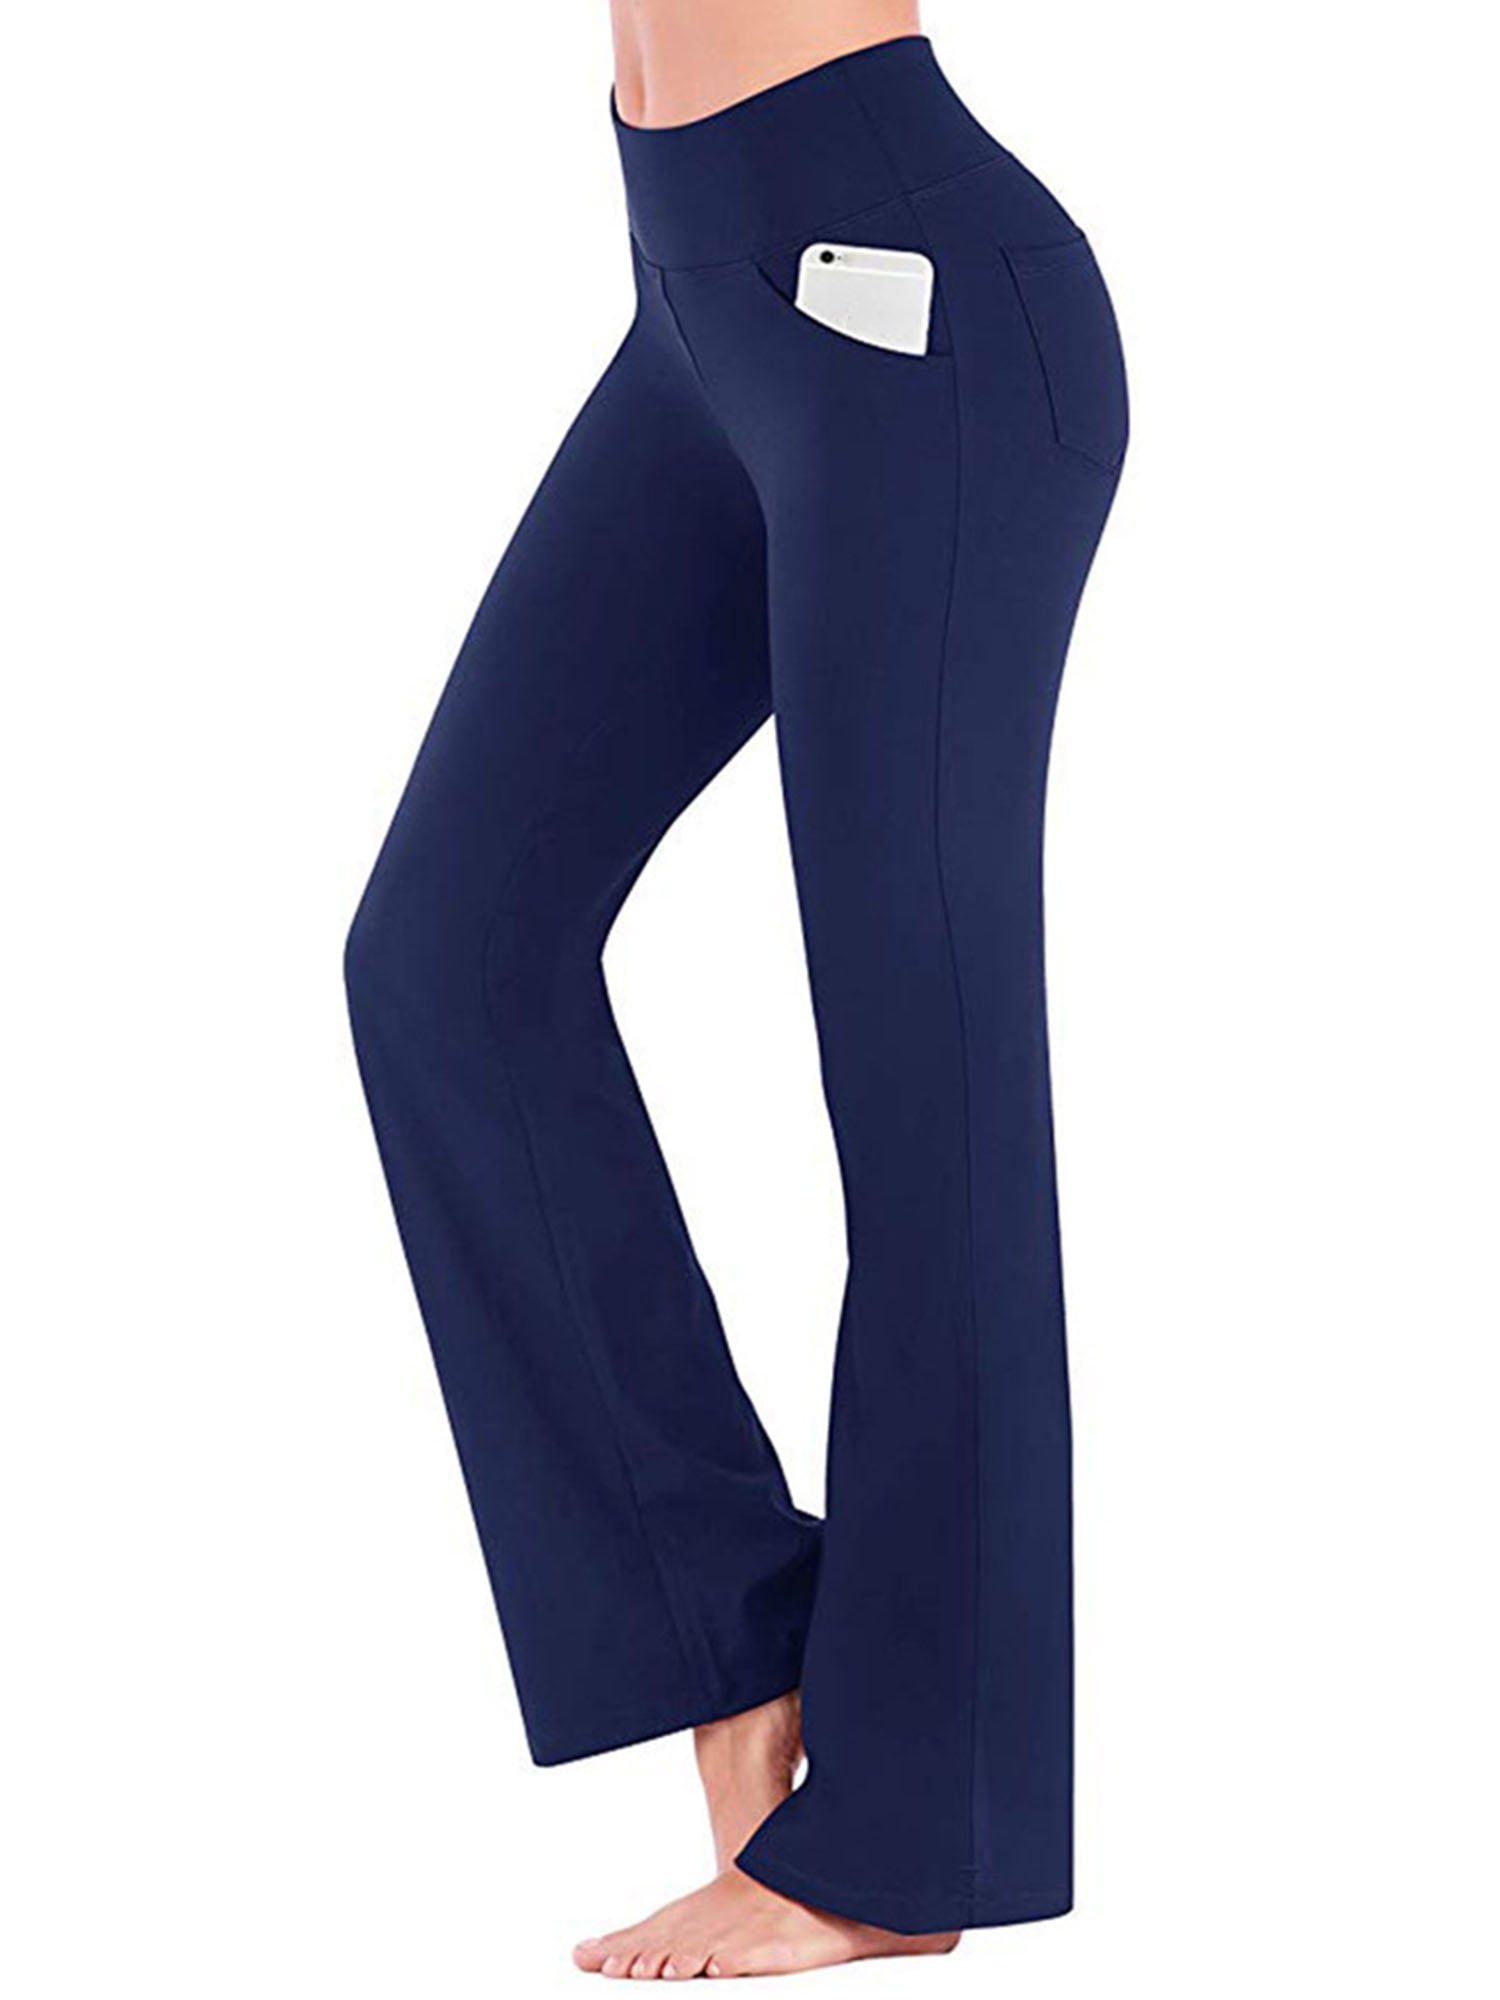 Shasmi Navy Blue Lightweight Stretchable Yoga Pants Boot-Cut